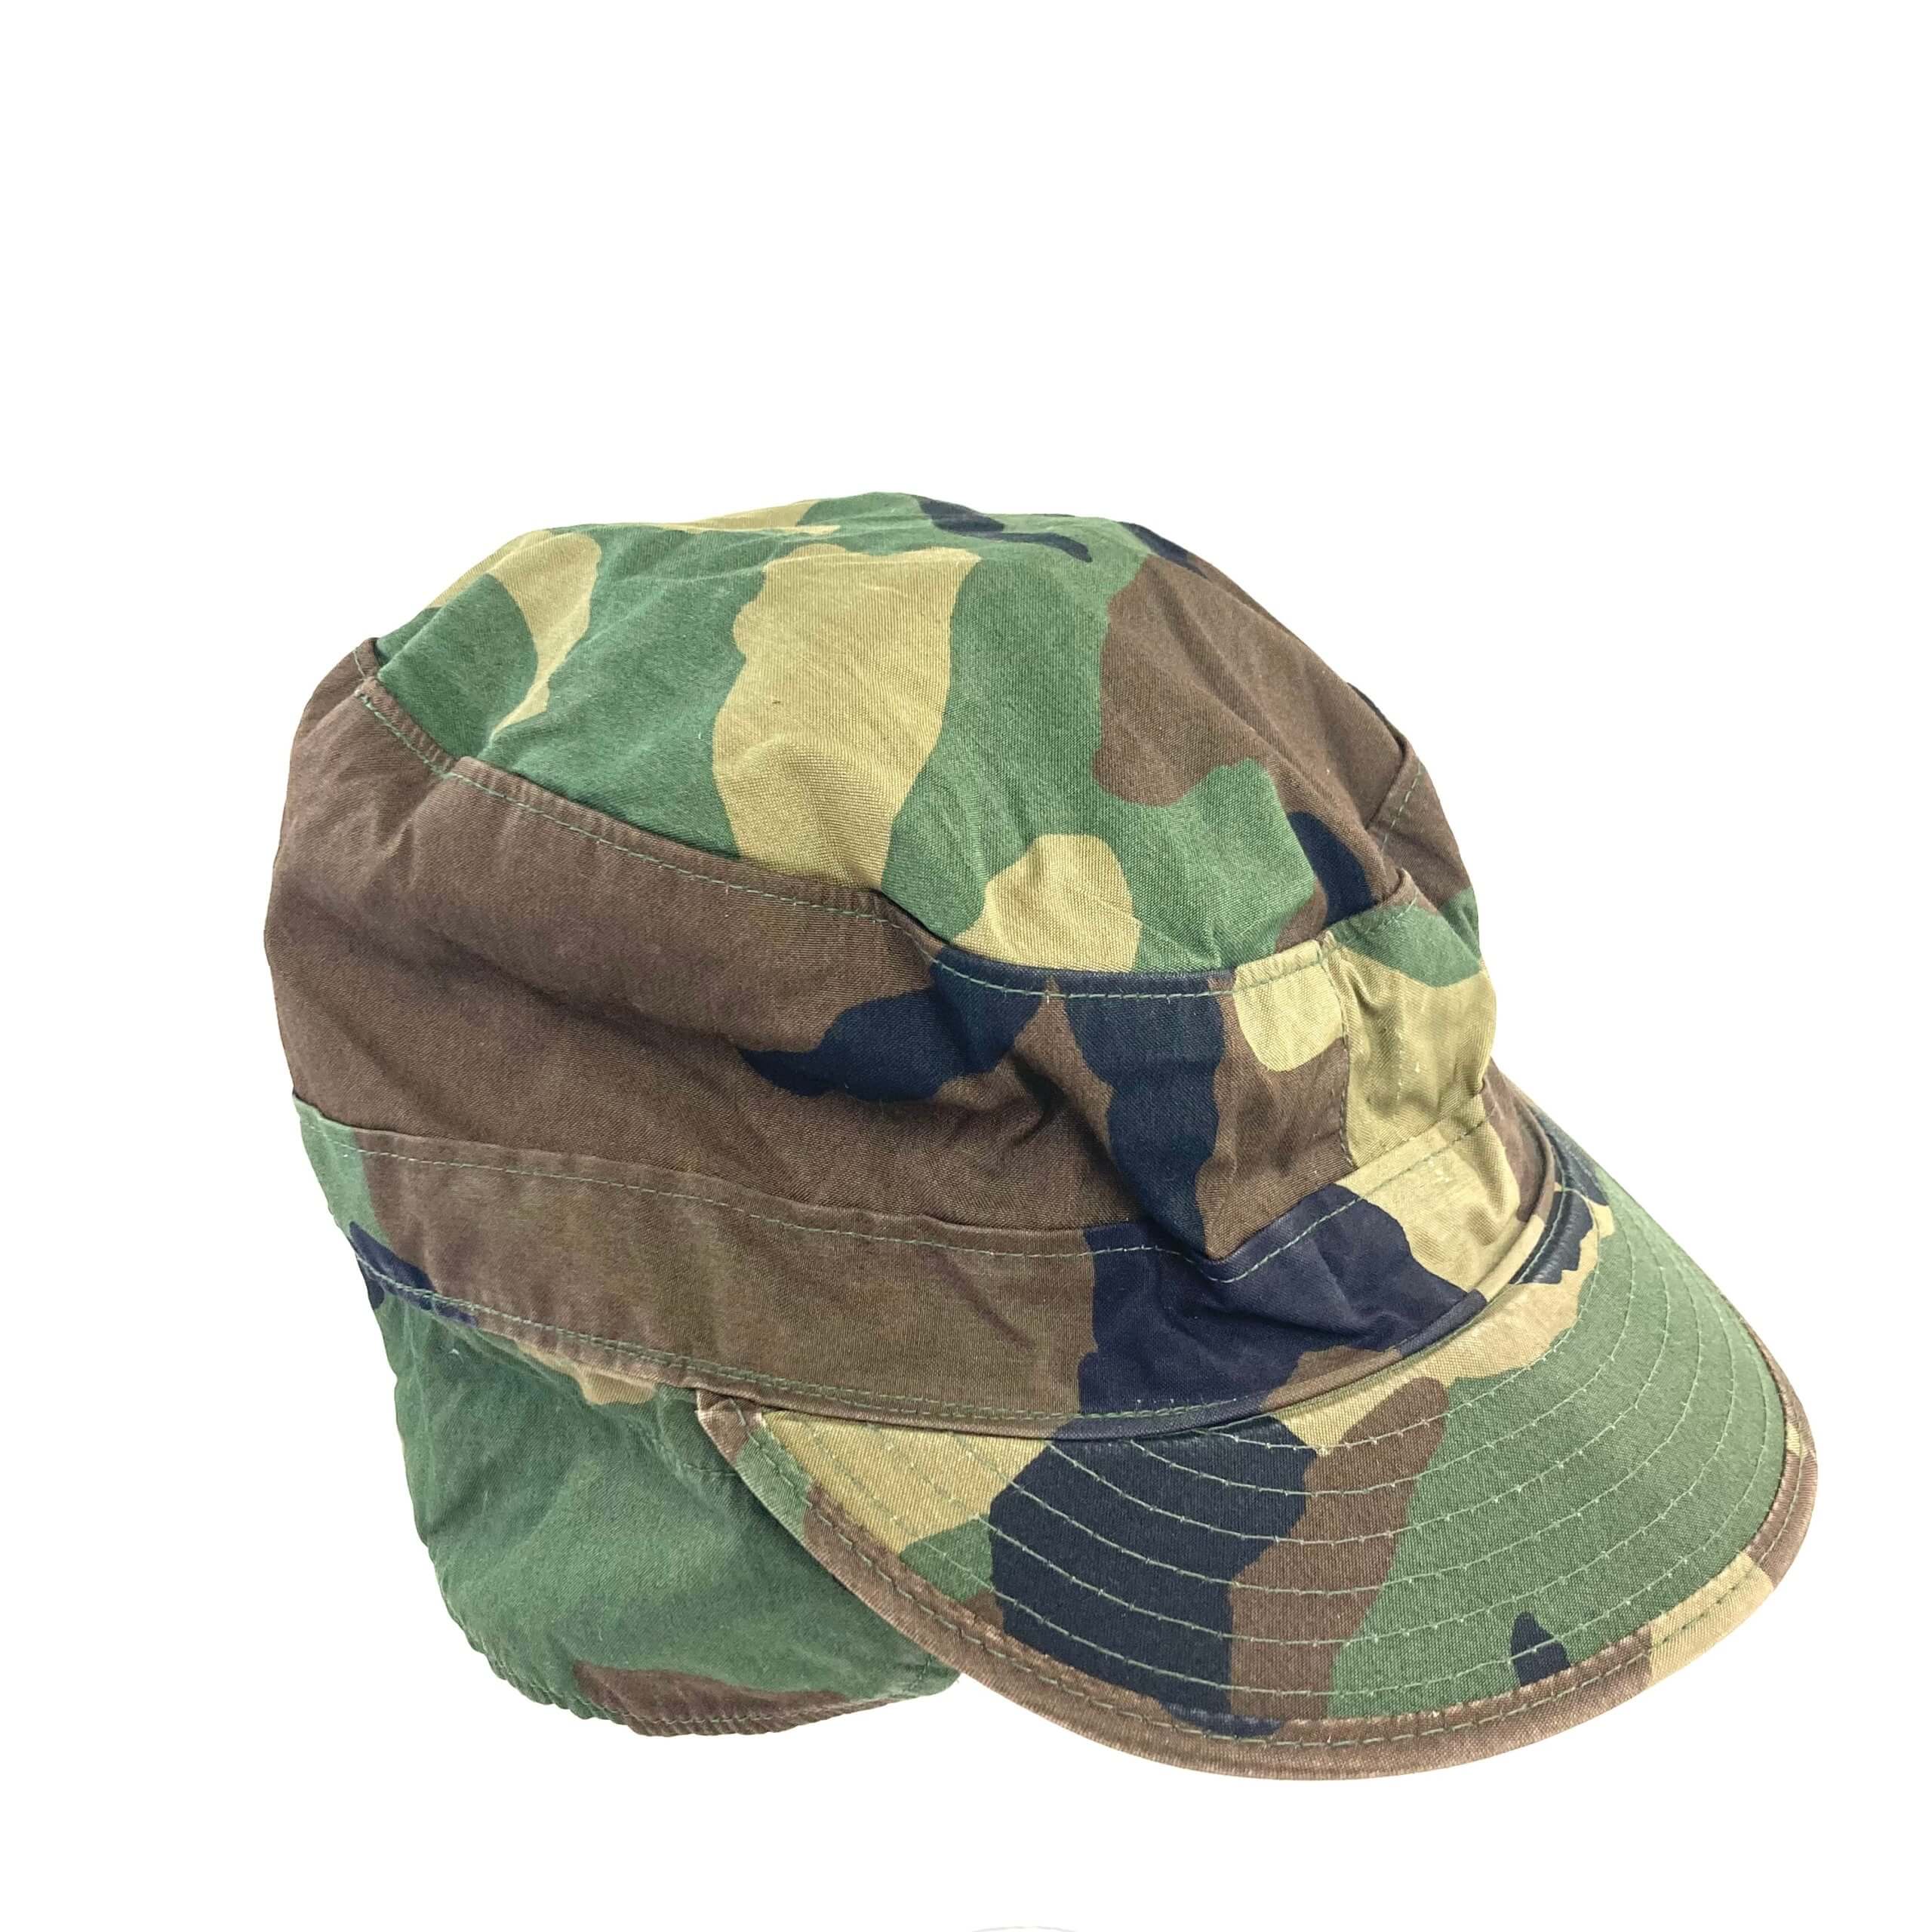 Top Headwear Camo Army Cadet Cap - Military Patrol Duck Hunting Hat  Woodland 